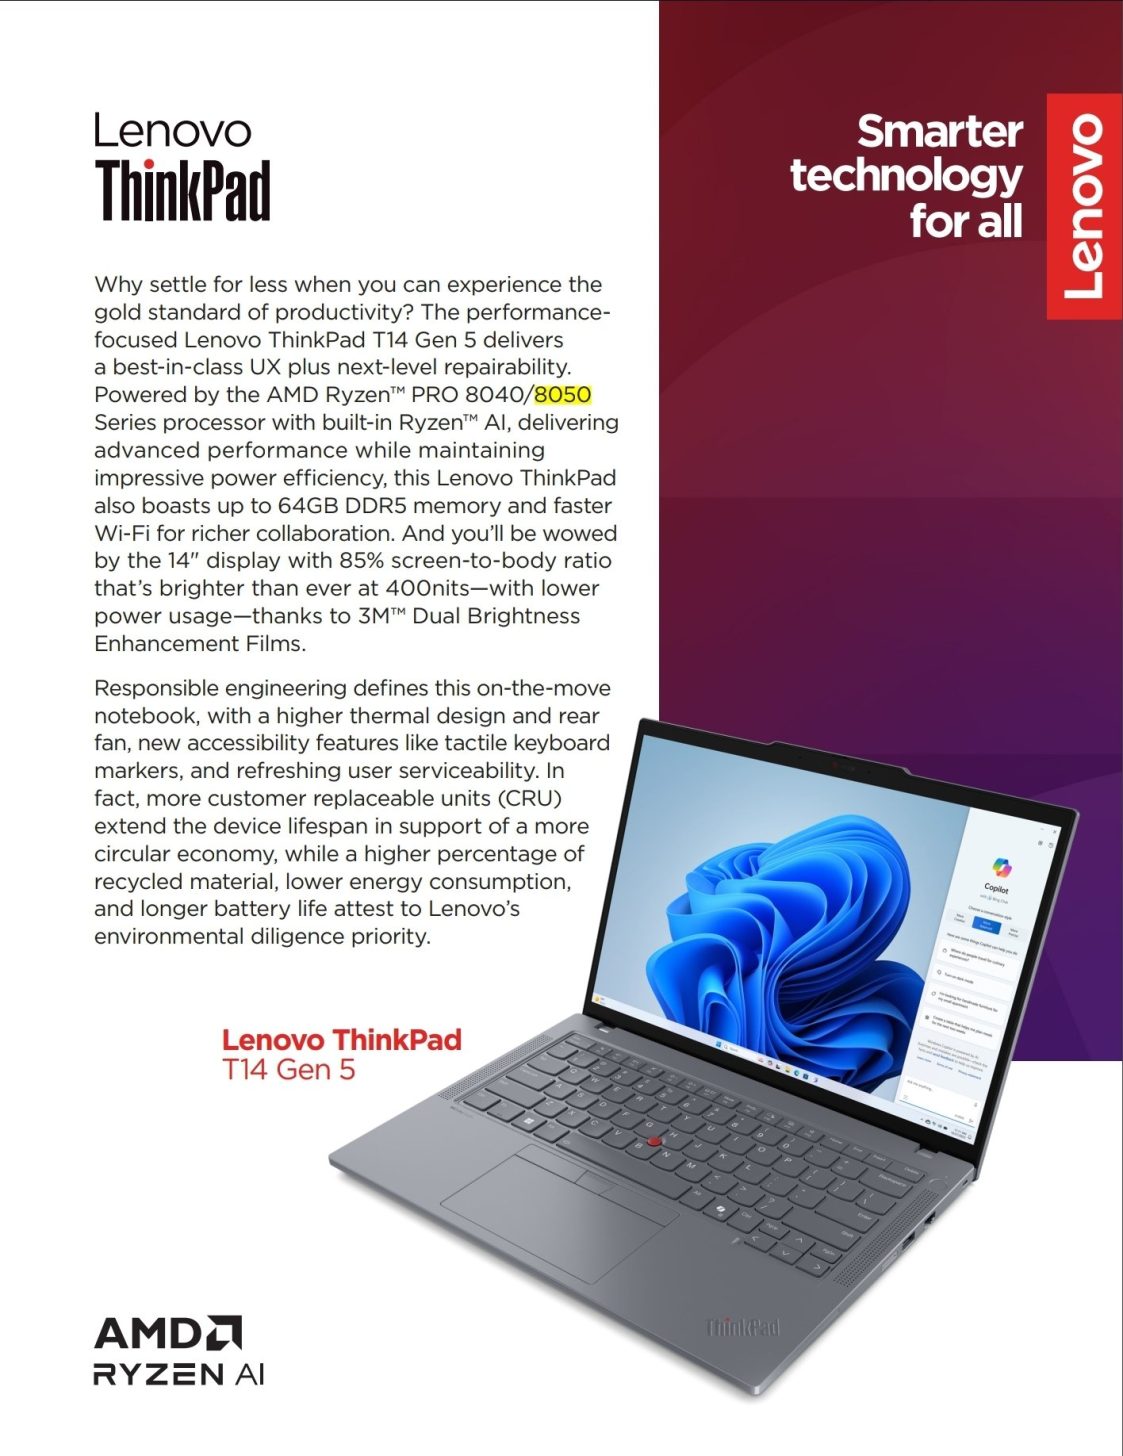 Lenovo-ThinkPad-T14-Gen5-AMD-Ryzen-Strix-Point-APUs-Leak-1123x1456.jpeg